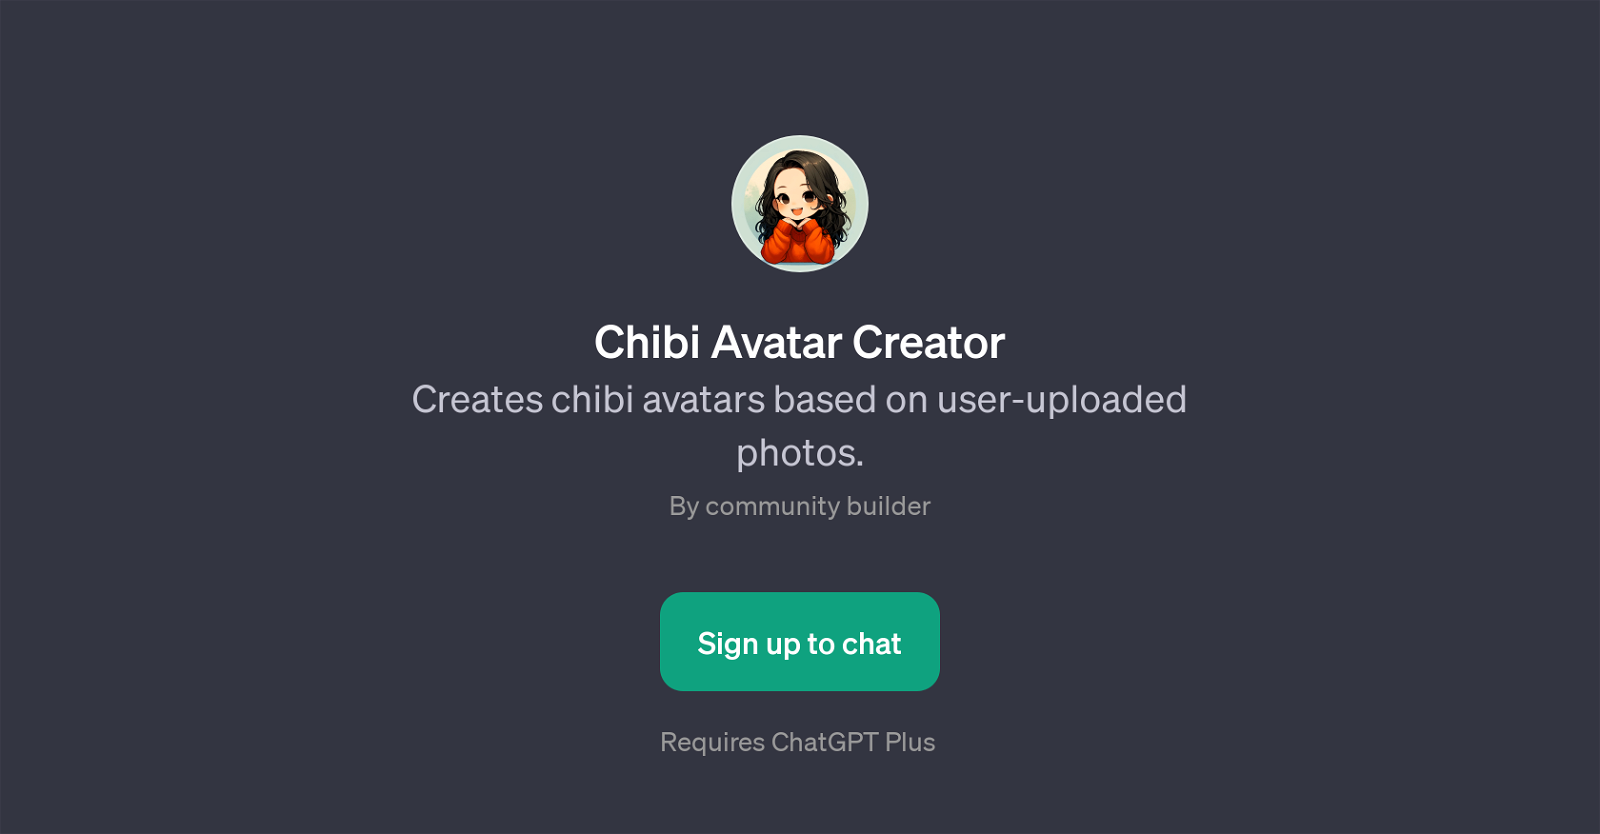 Chibi Avatar Creator website